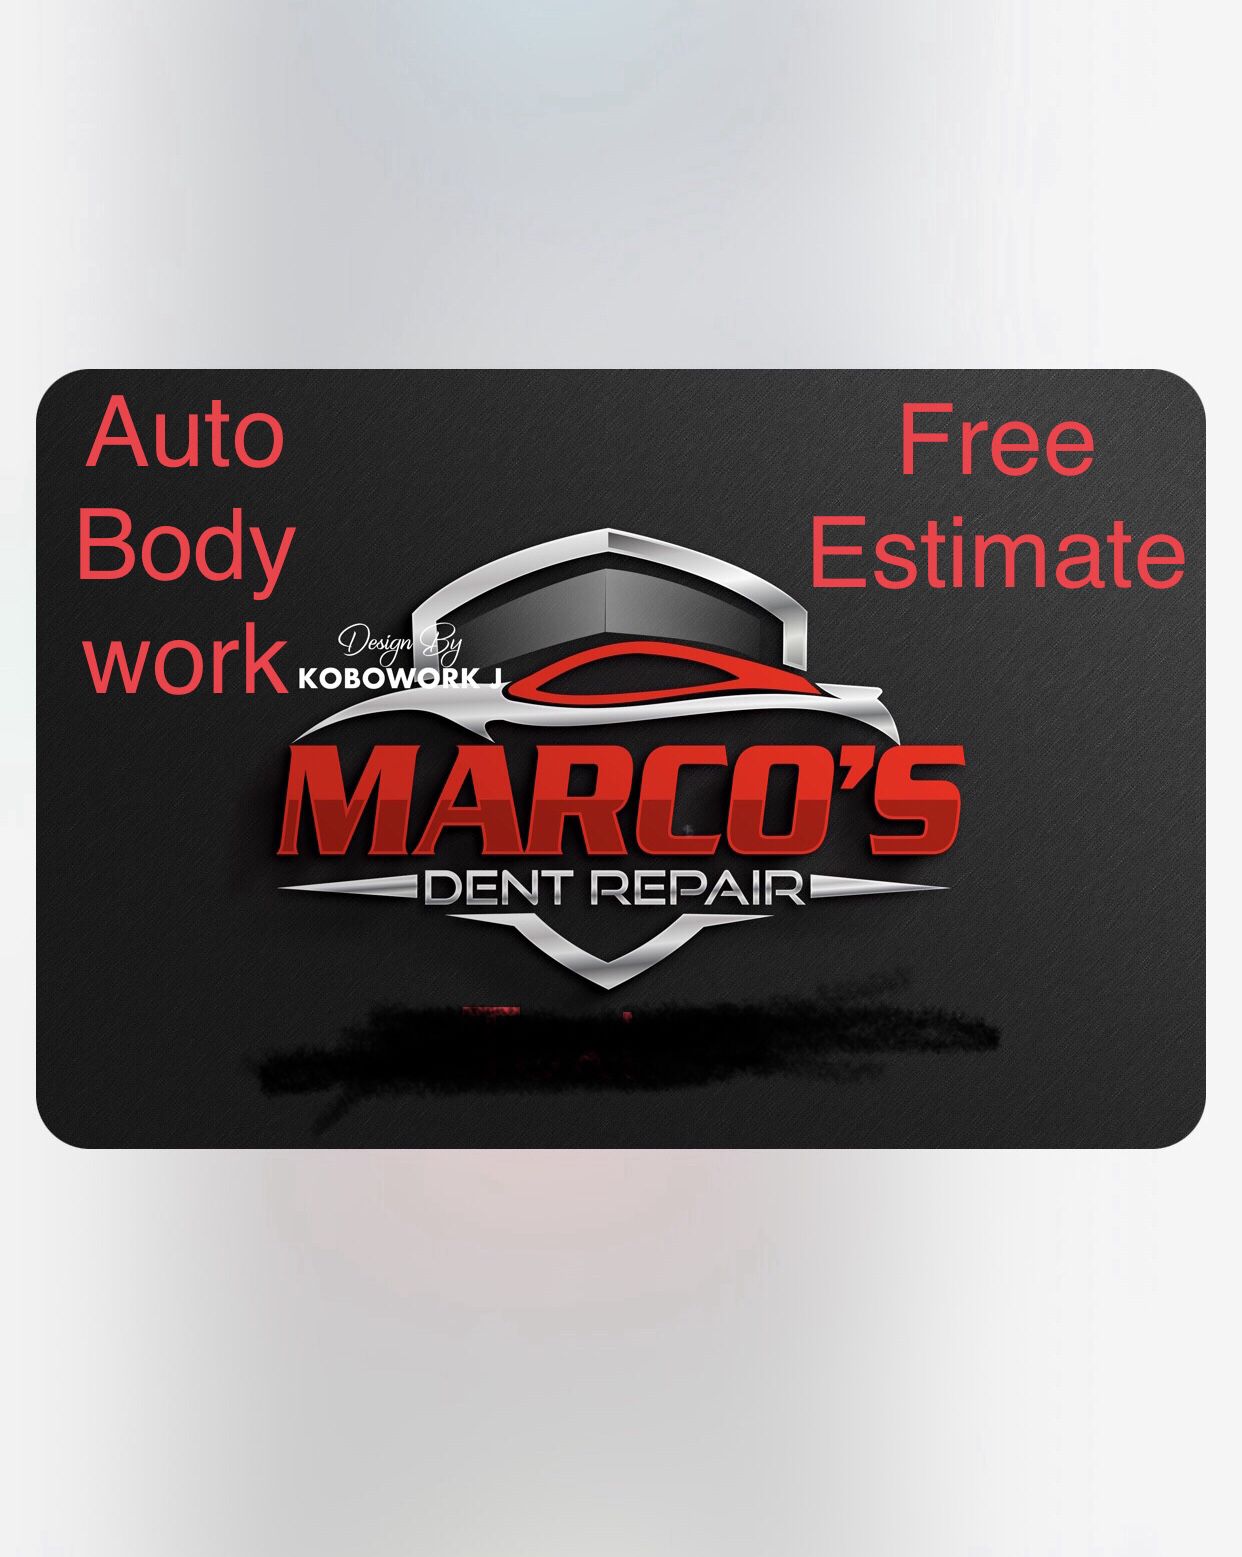 Marco’s Auto Body Shop-Free Estimate-shop Or Mobile